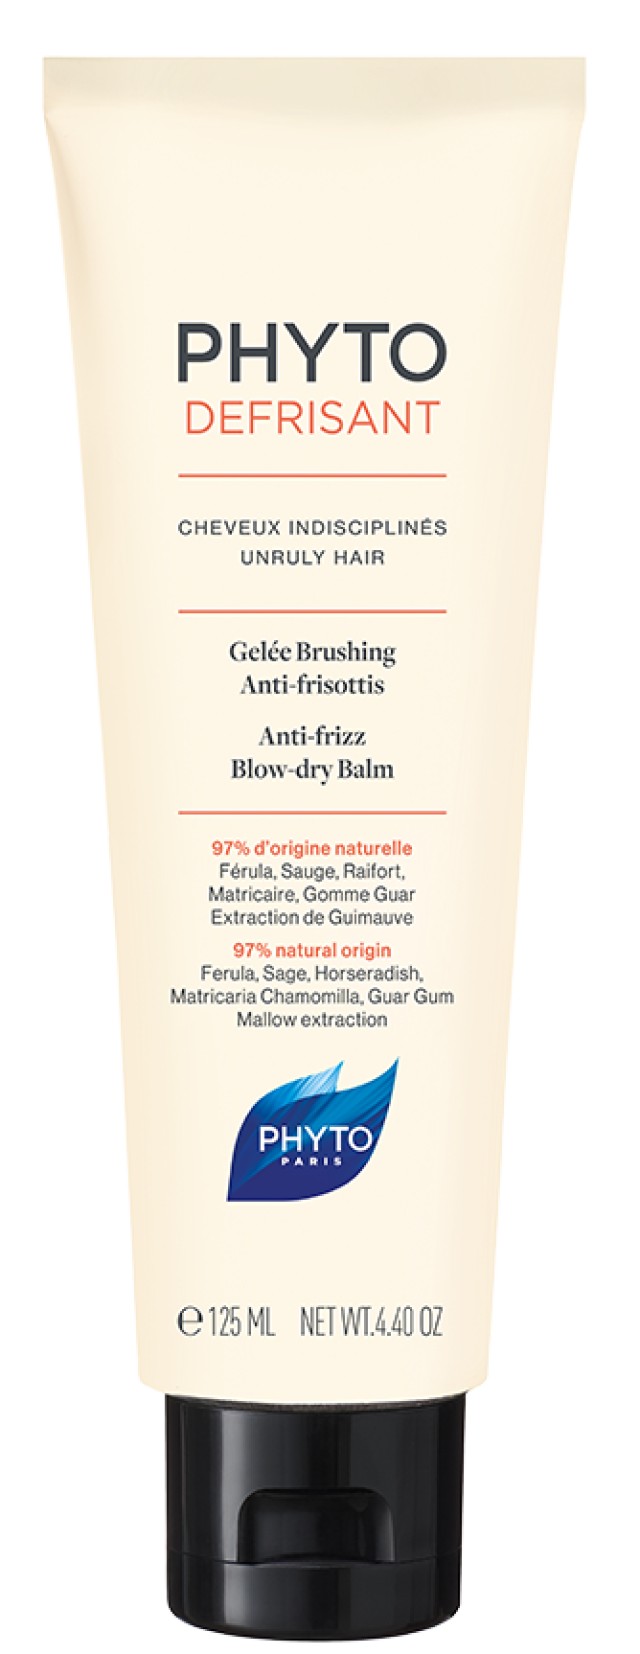 Phyto Phytodefrisant Anti-frizz Blow-dry Balm Brushing Gel 125ML